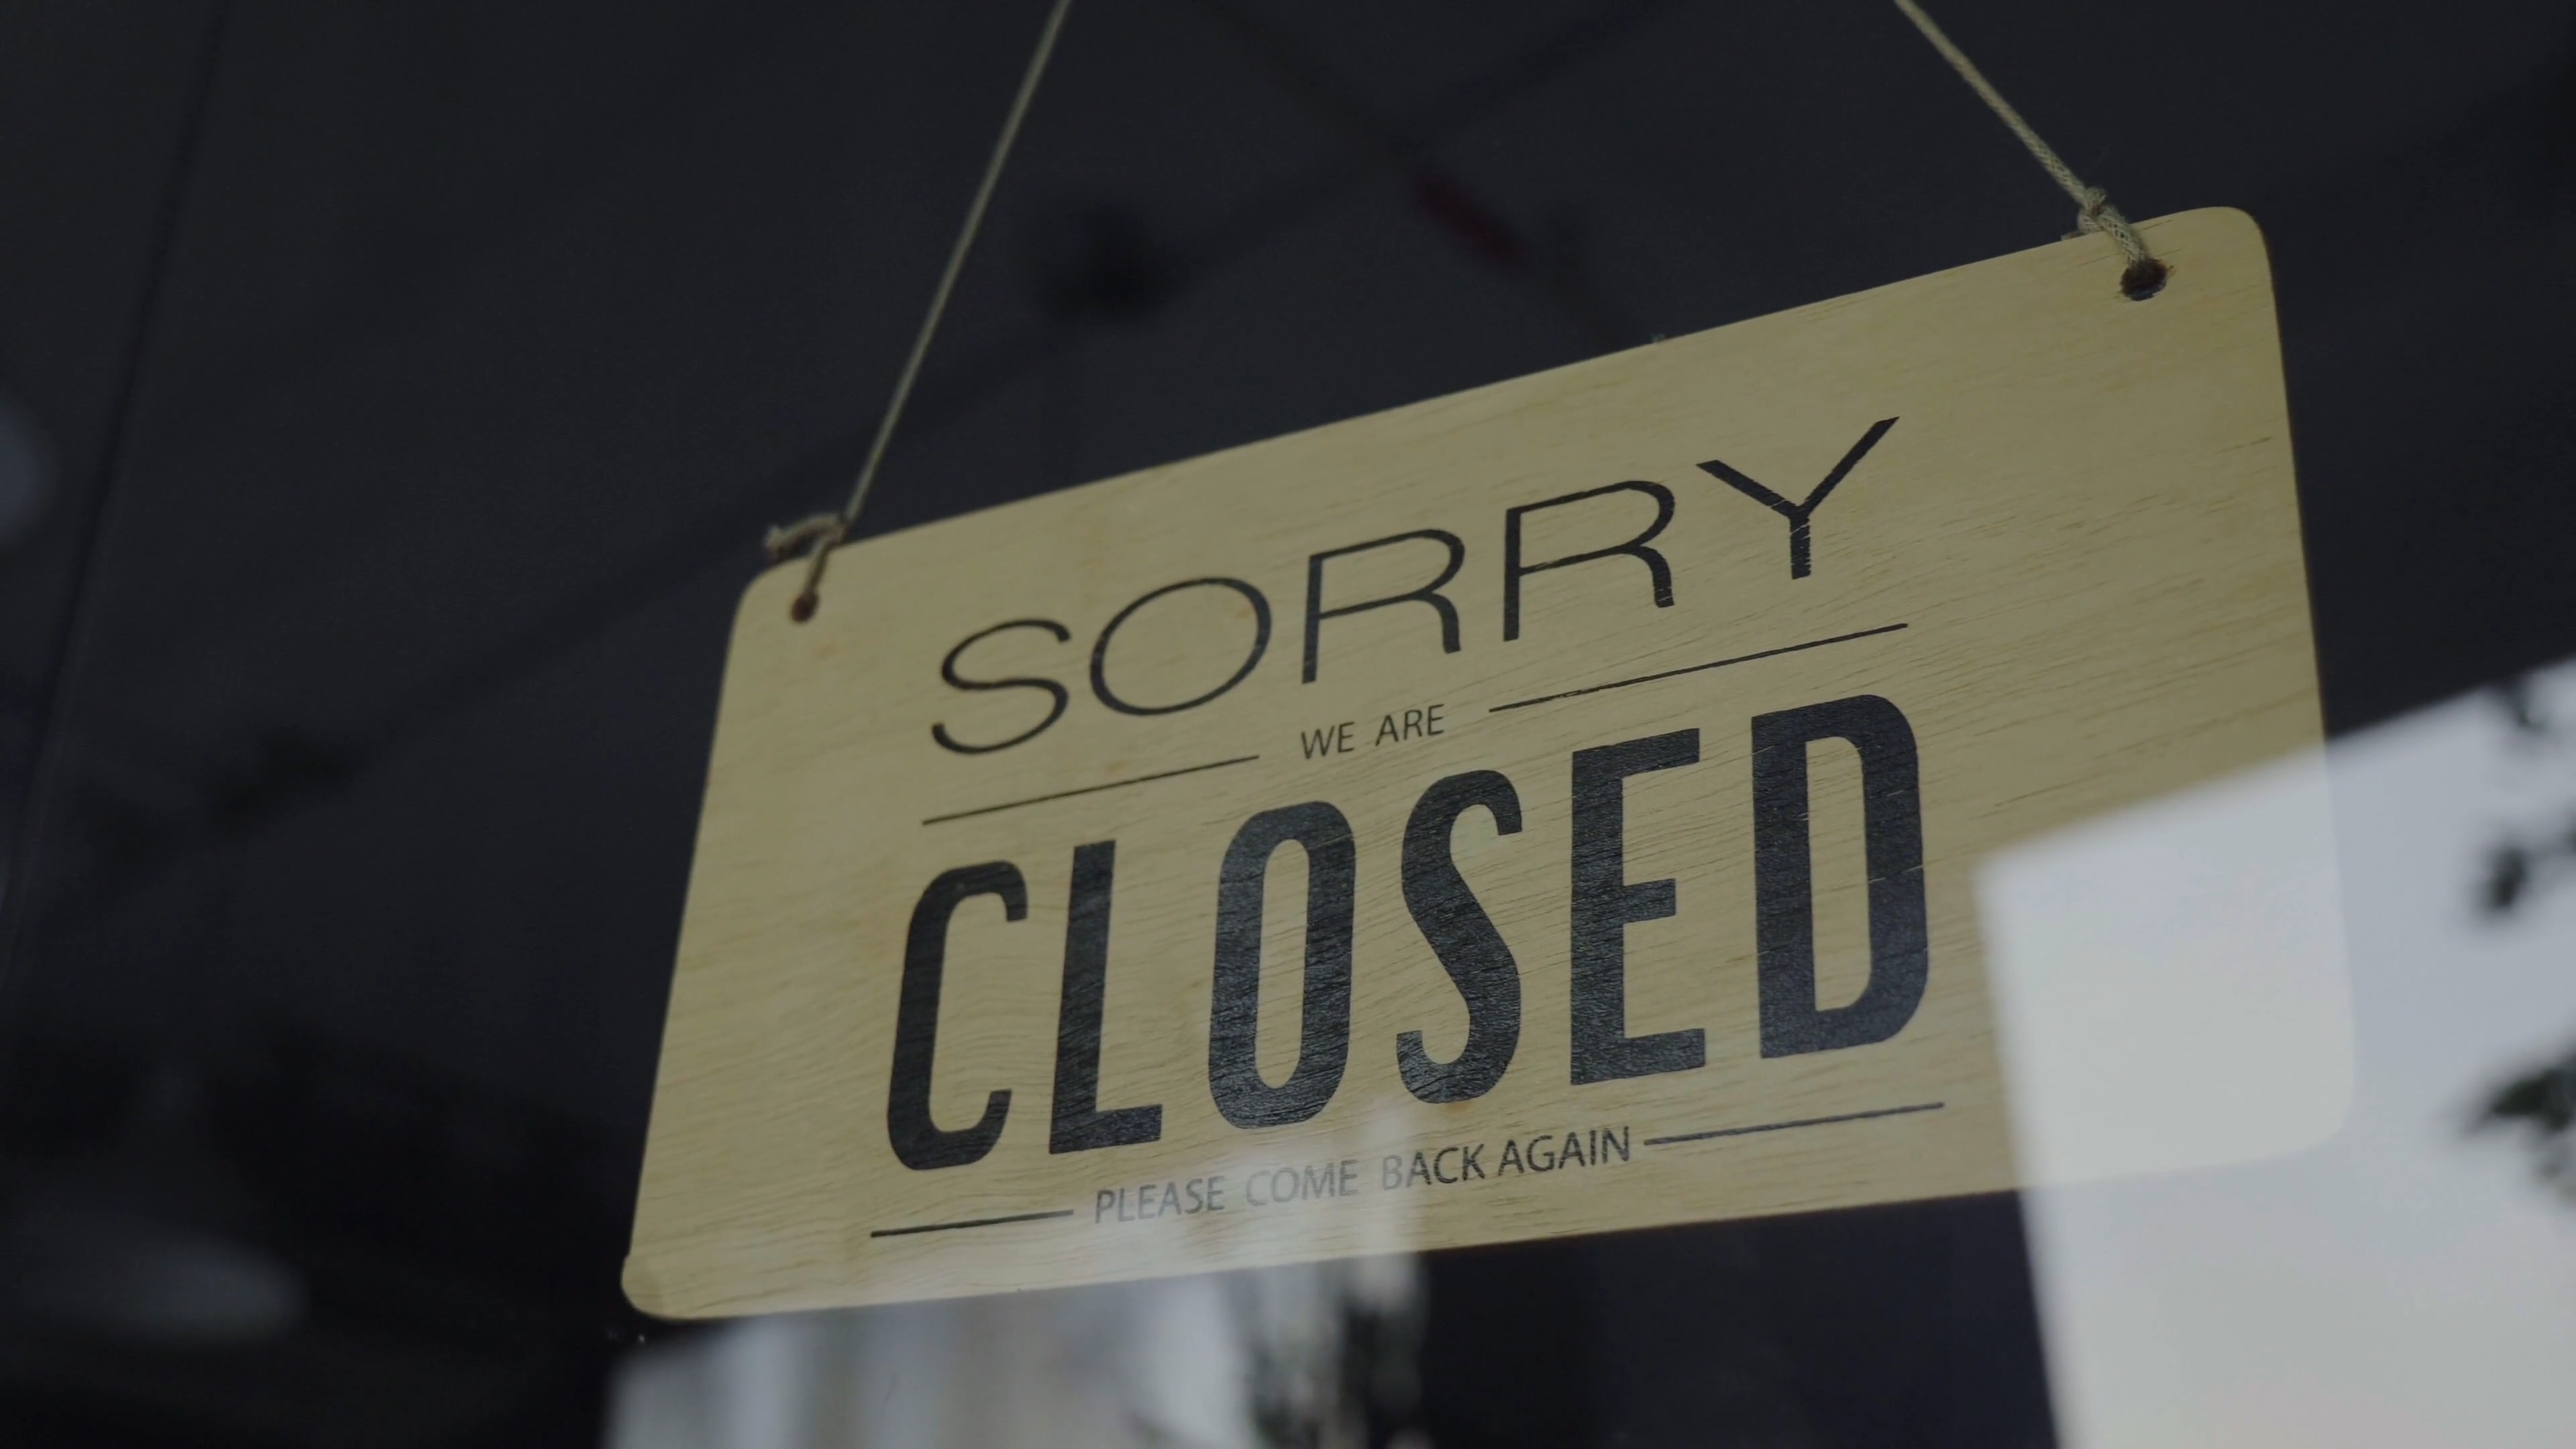 Sunday trading rules: Should opening restrictions on UK shops be loosened?